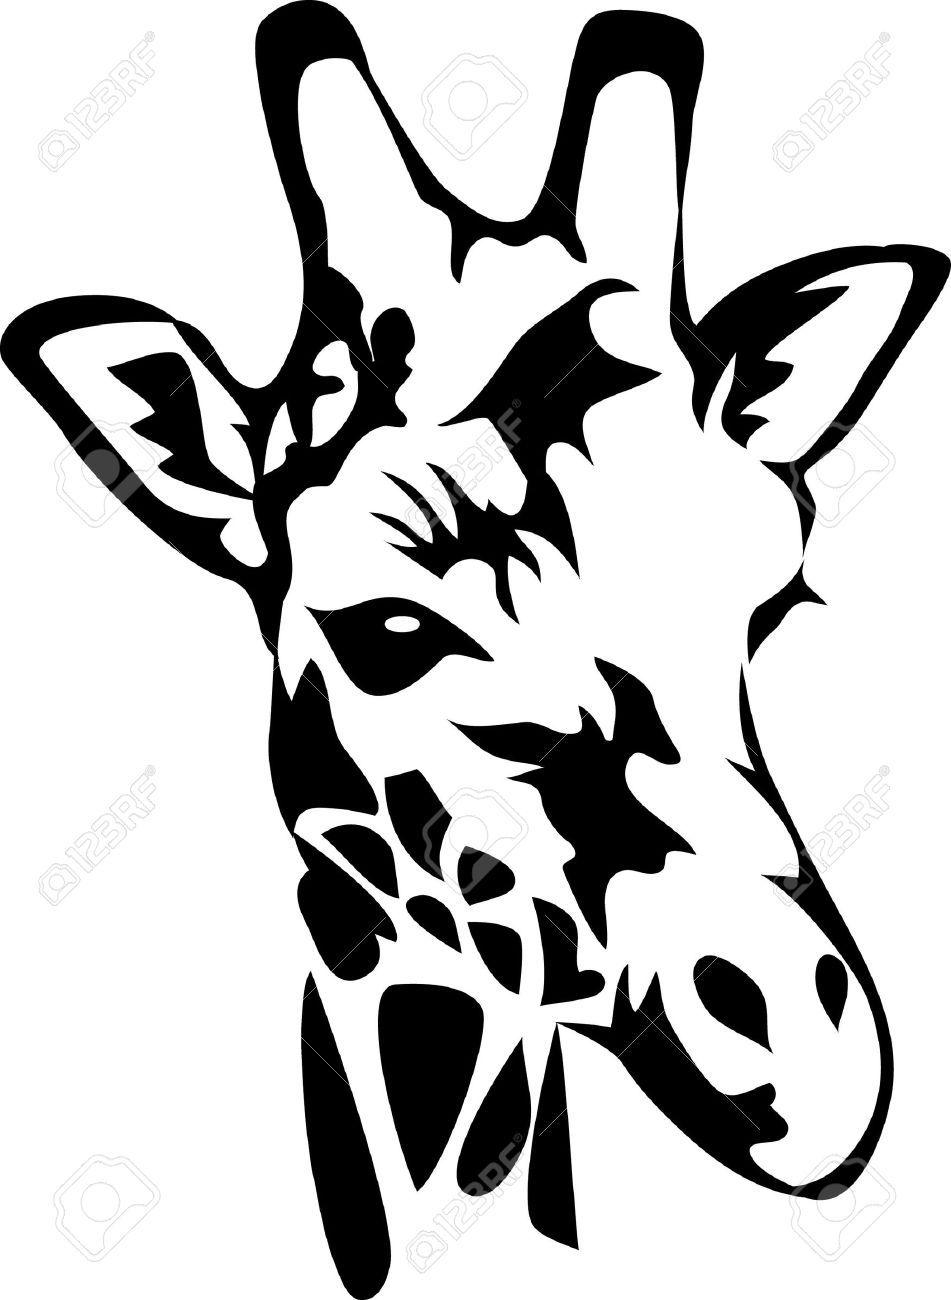 Giraffe Face Logo - Giraffe Face Drawing at GetDrawings.com | Free for personal use ...